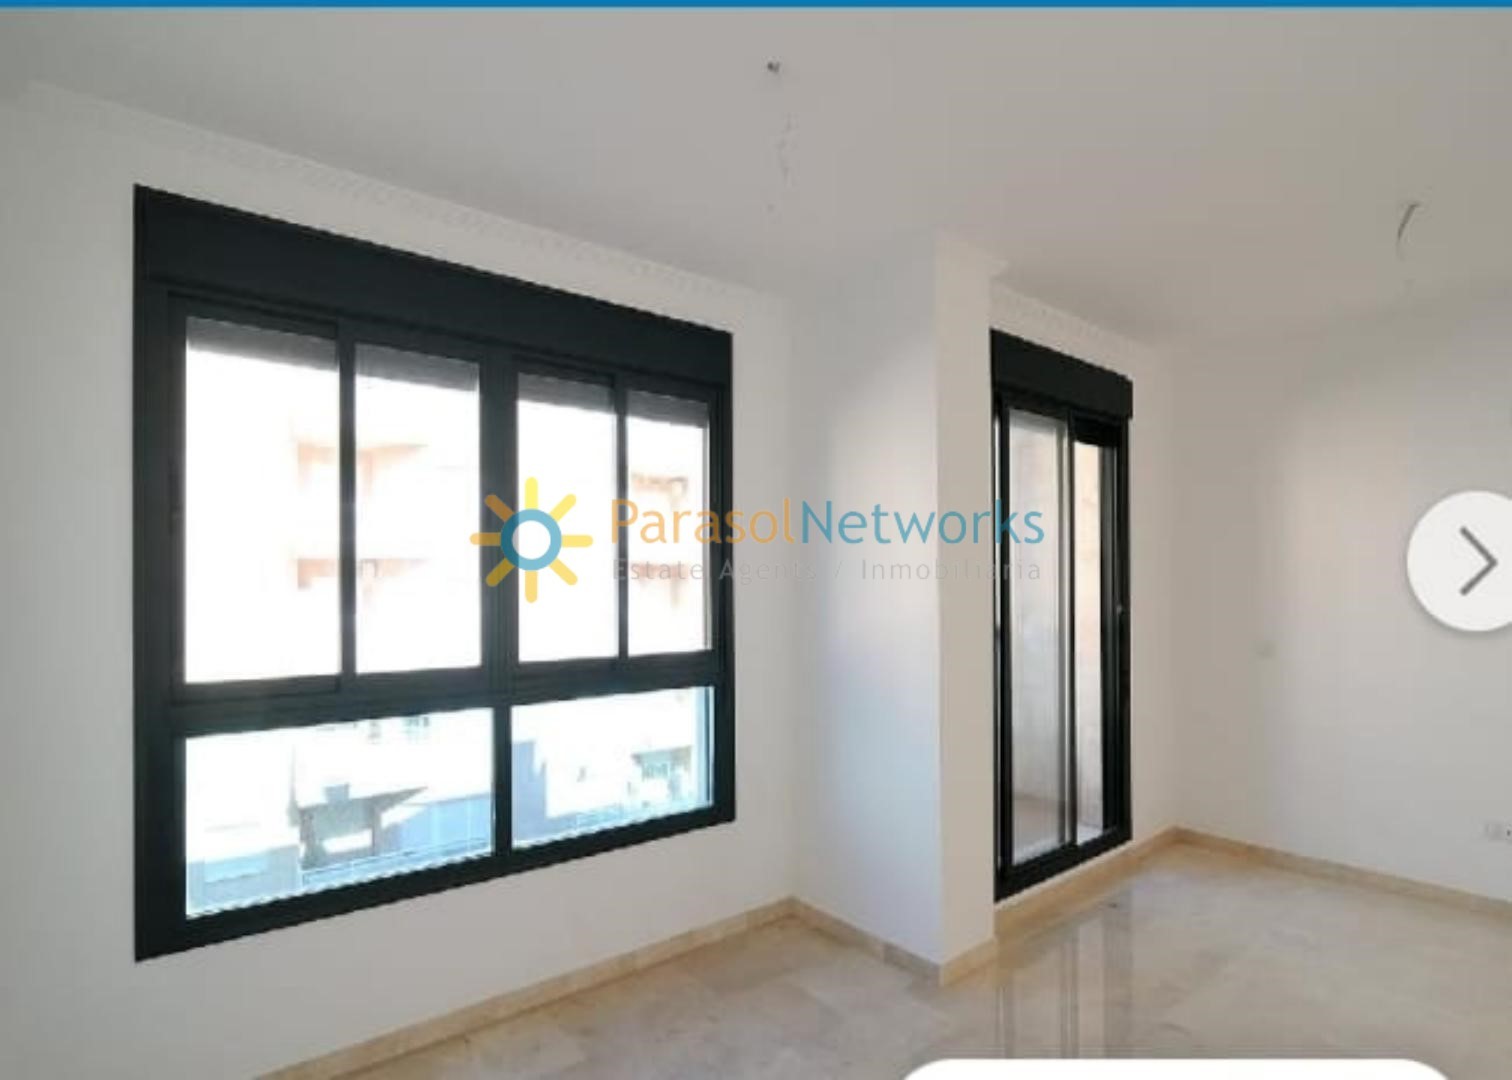 Apartment for sale in Oliva – Ref: 803